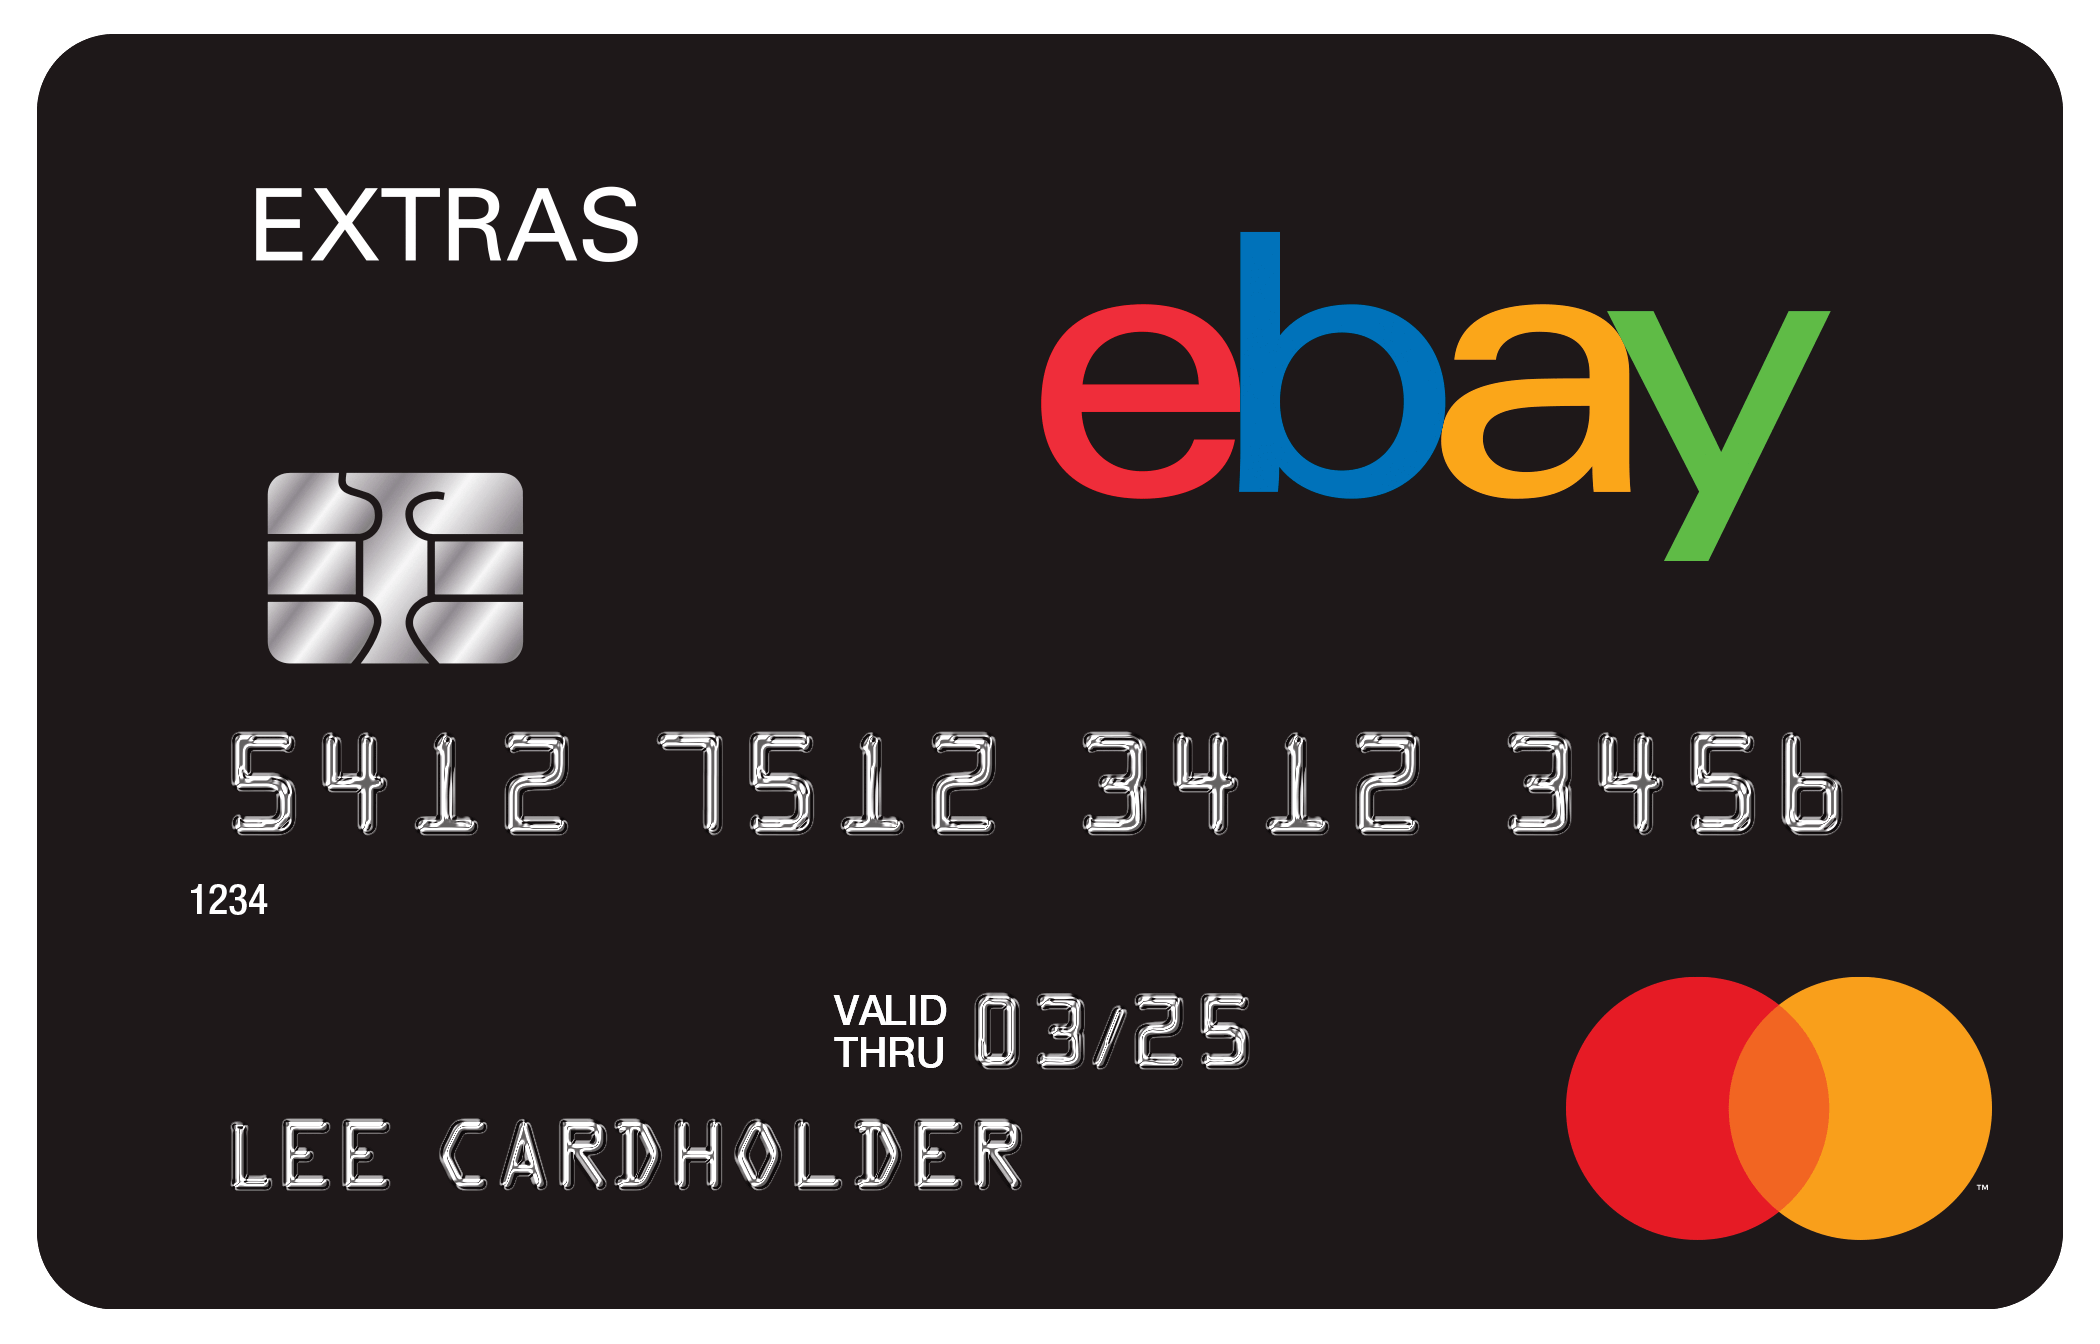 eBay Extras Mastercard